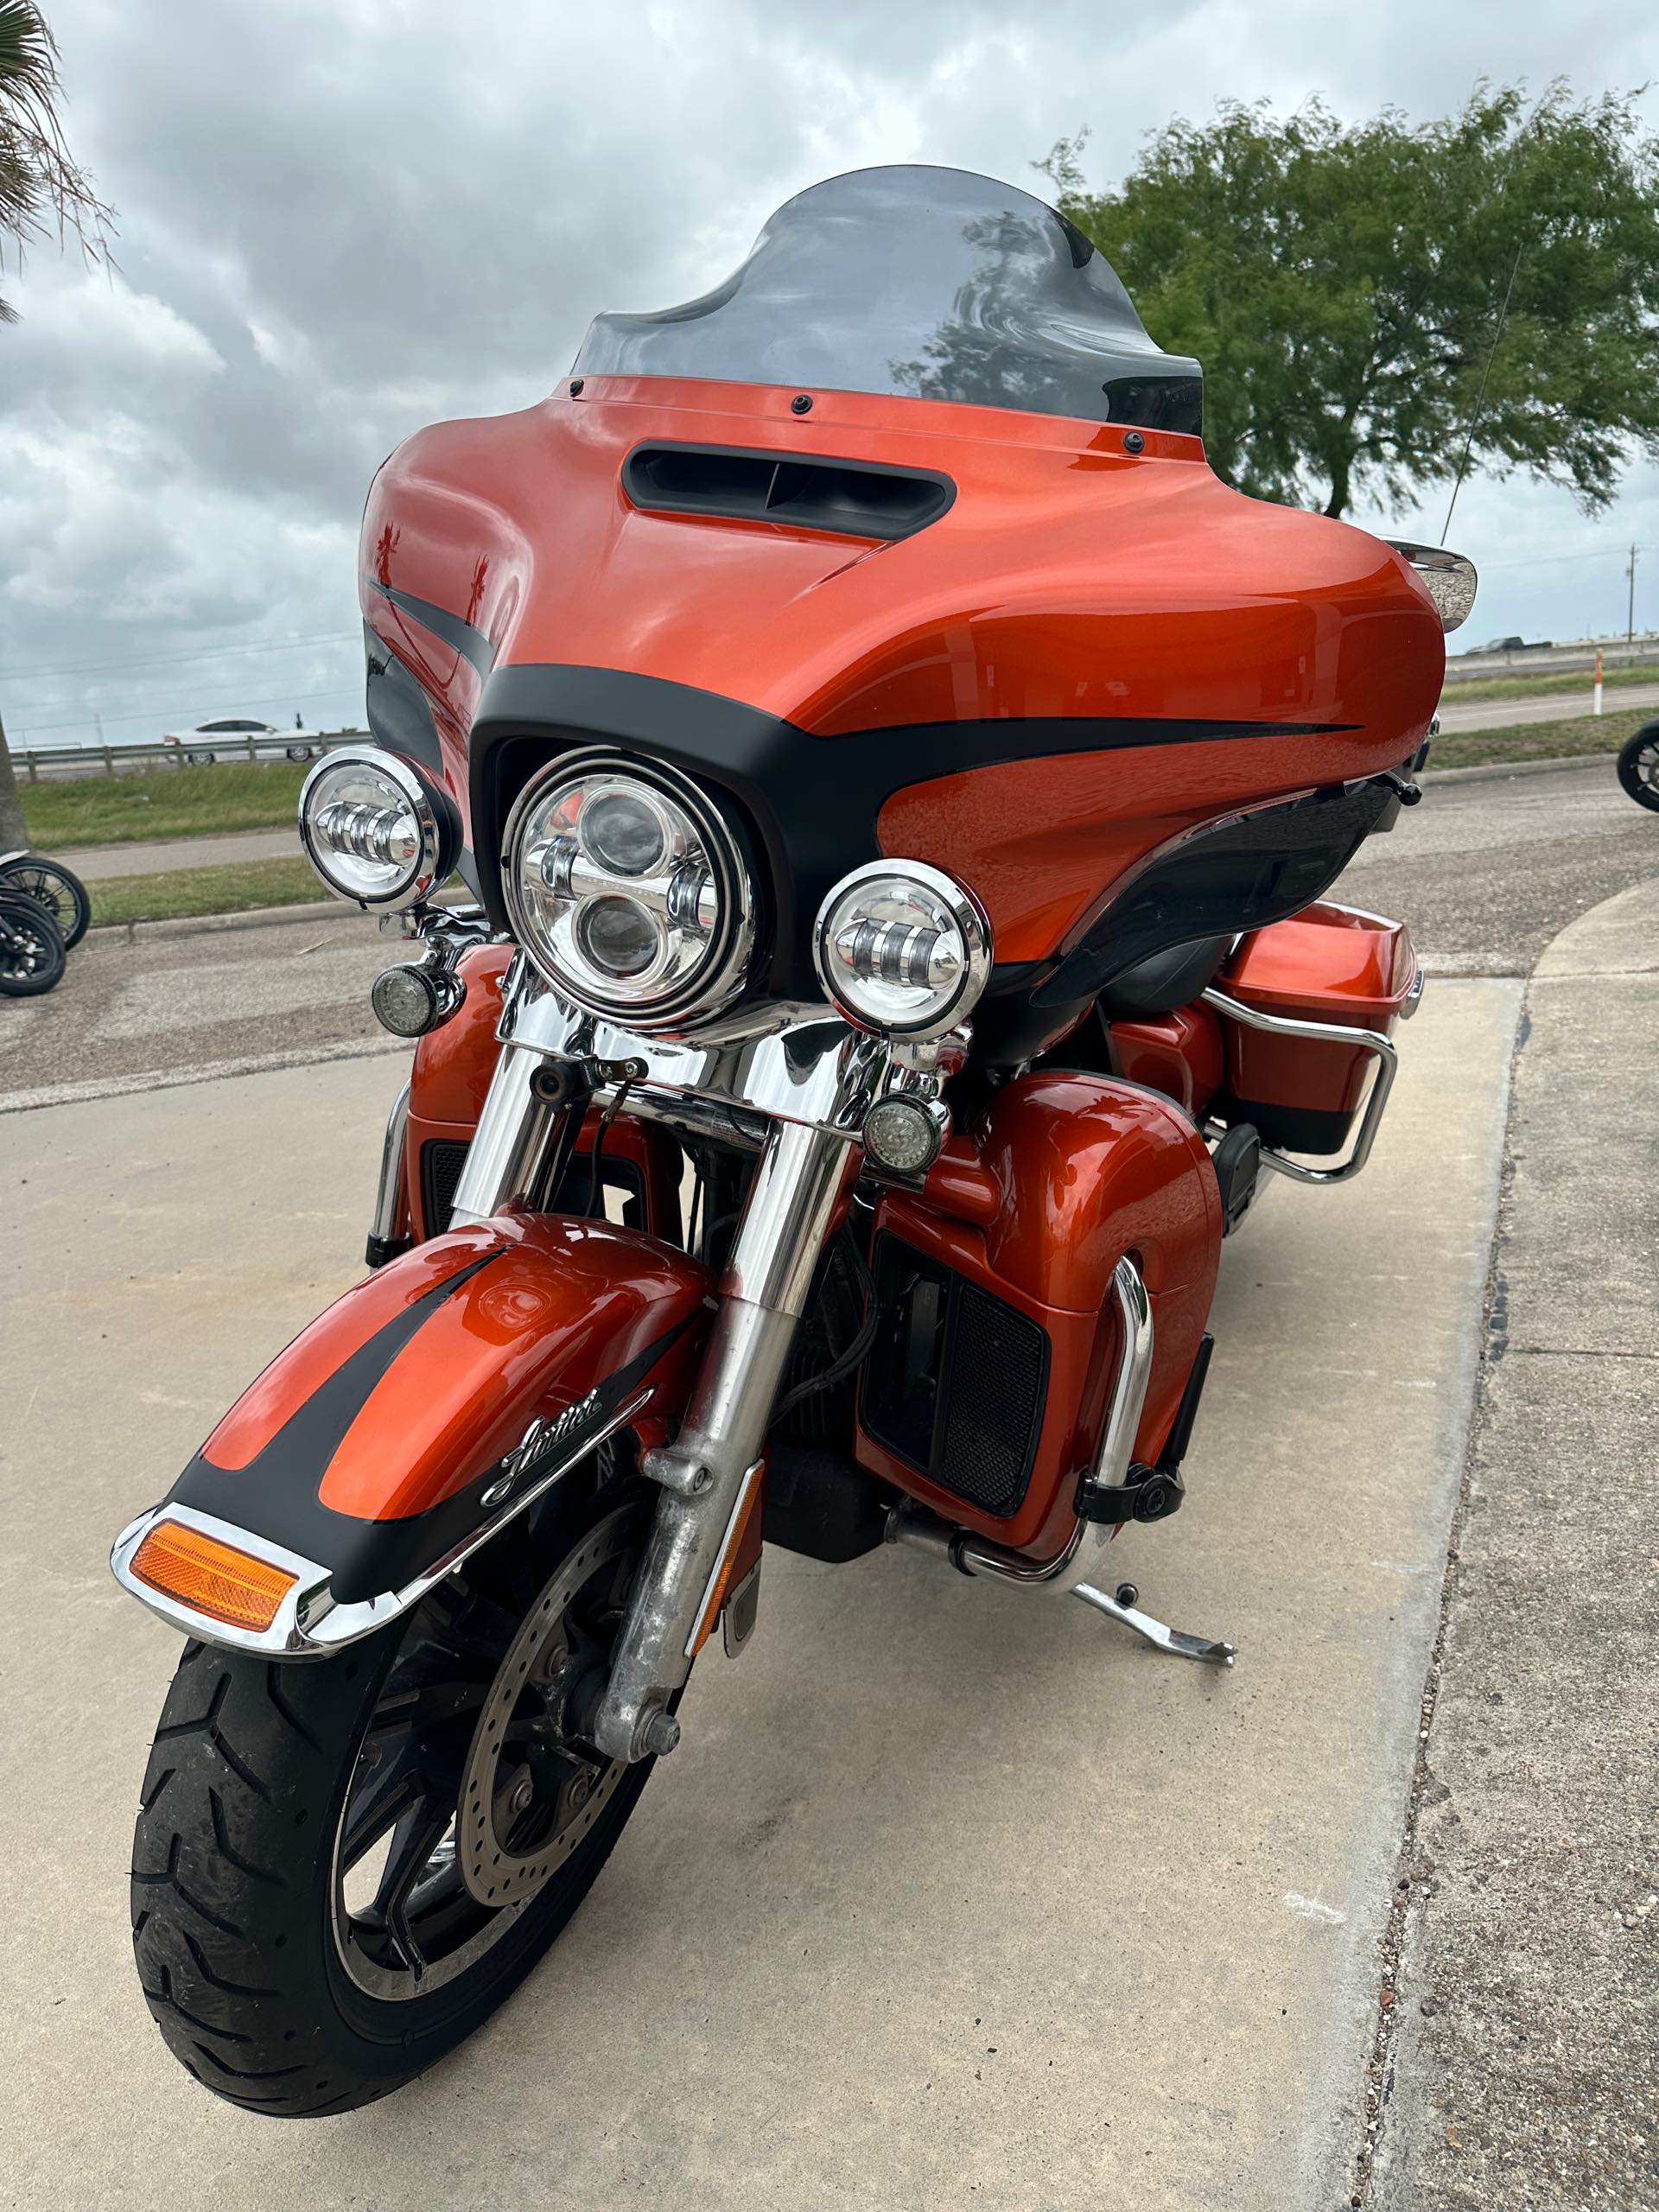 2019 Harley-Davidson Electra Glide Ultra Limited at Corpus Christi Harley Davidson